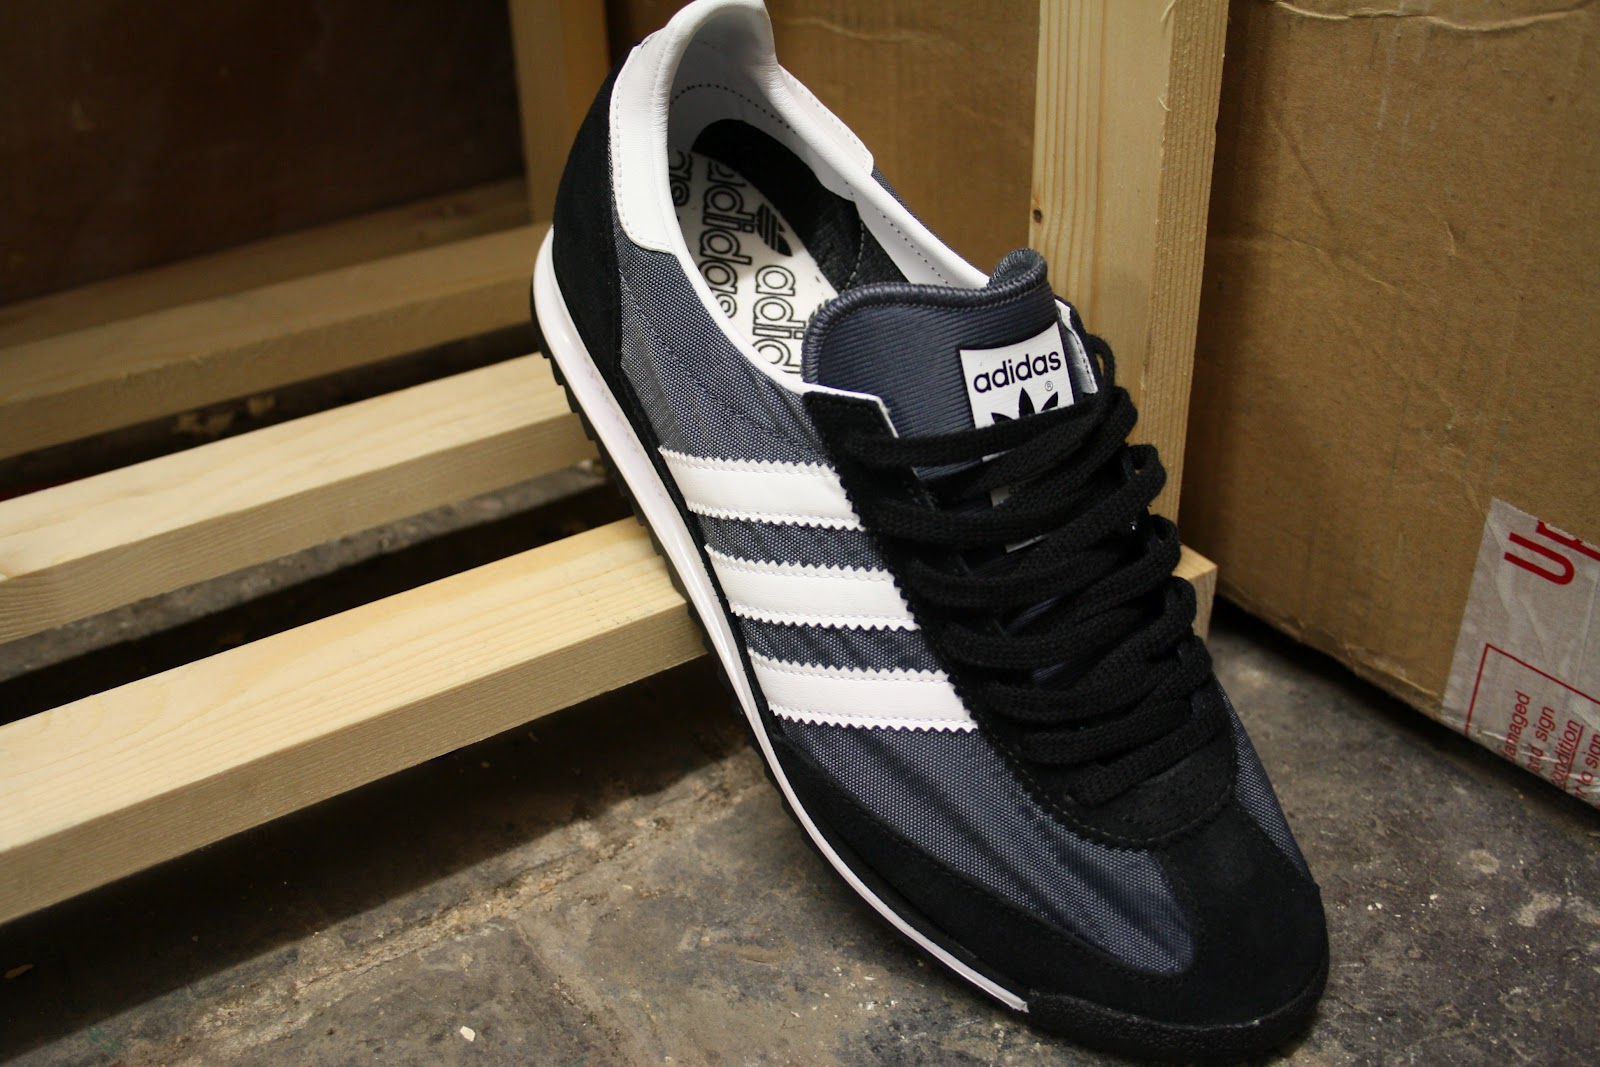 New Adidas SL 72 For Spring 2012 | The Kemist